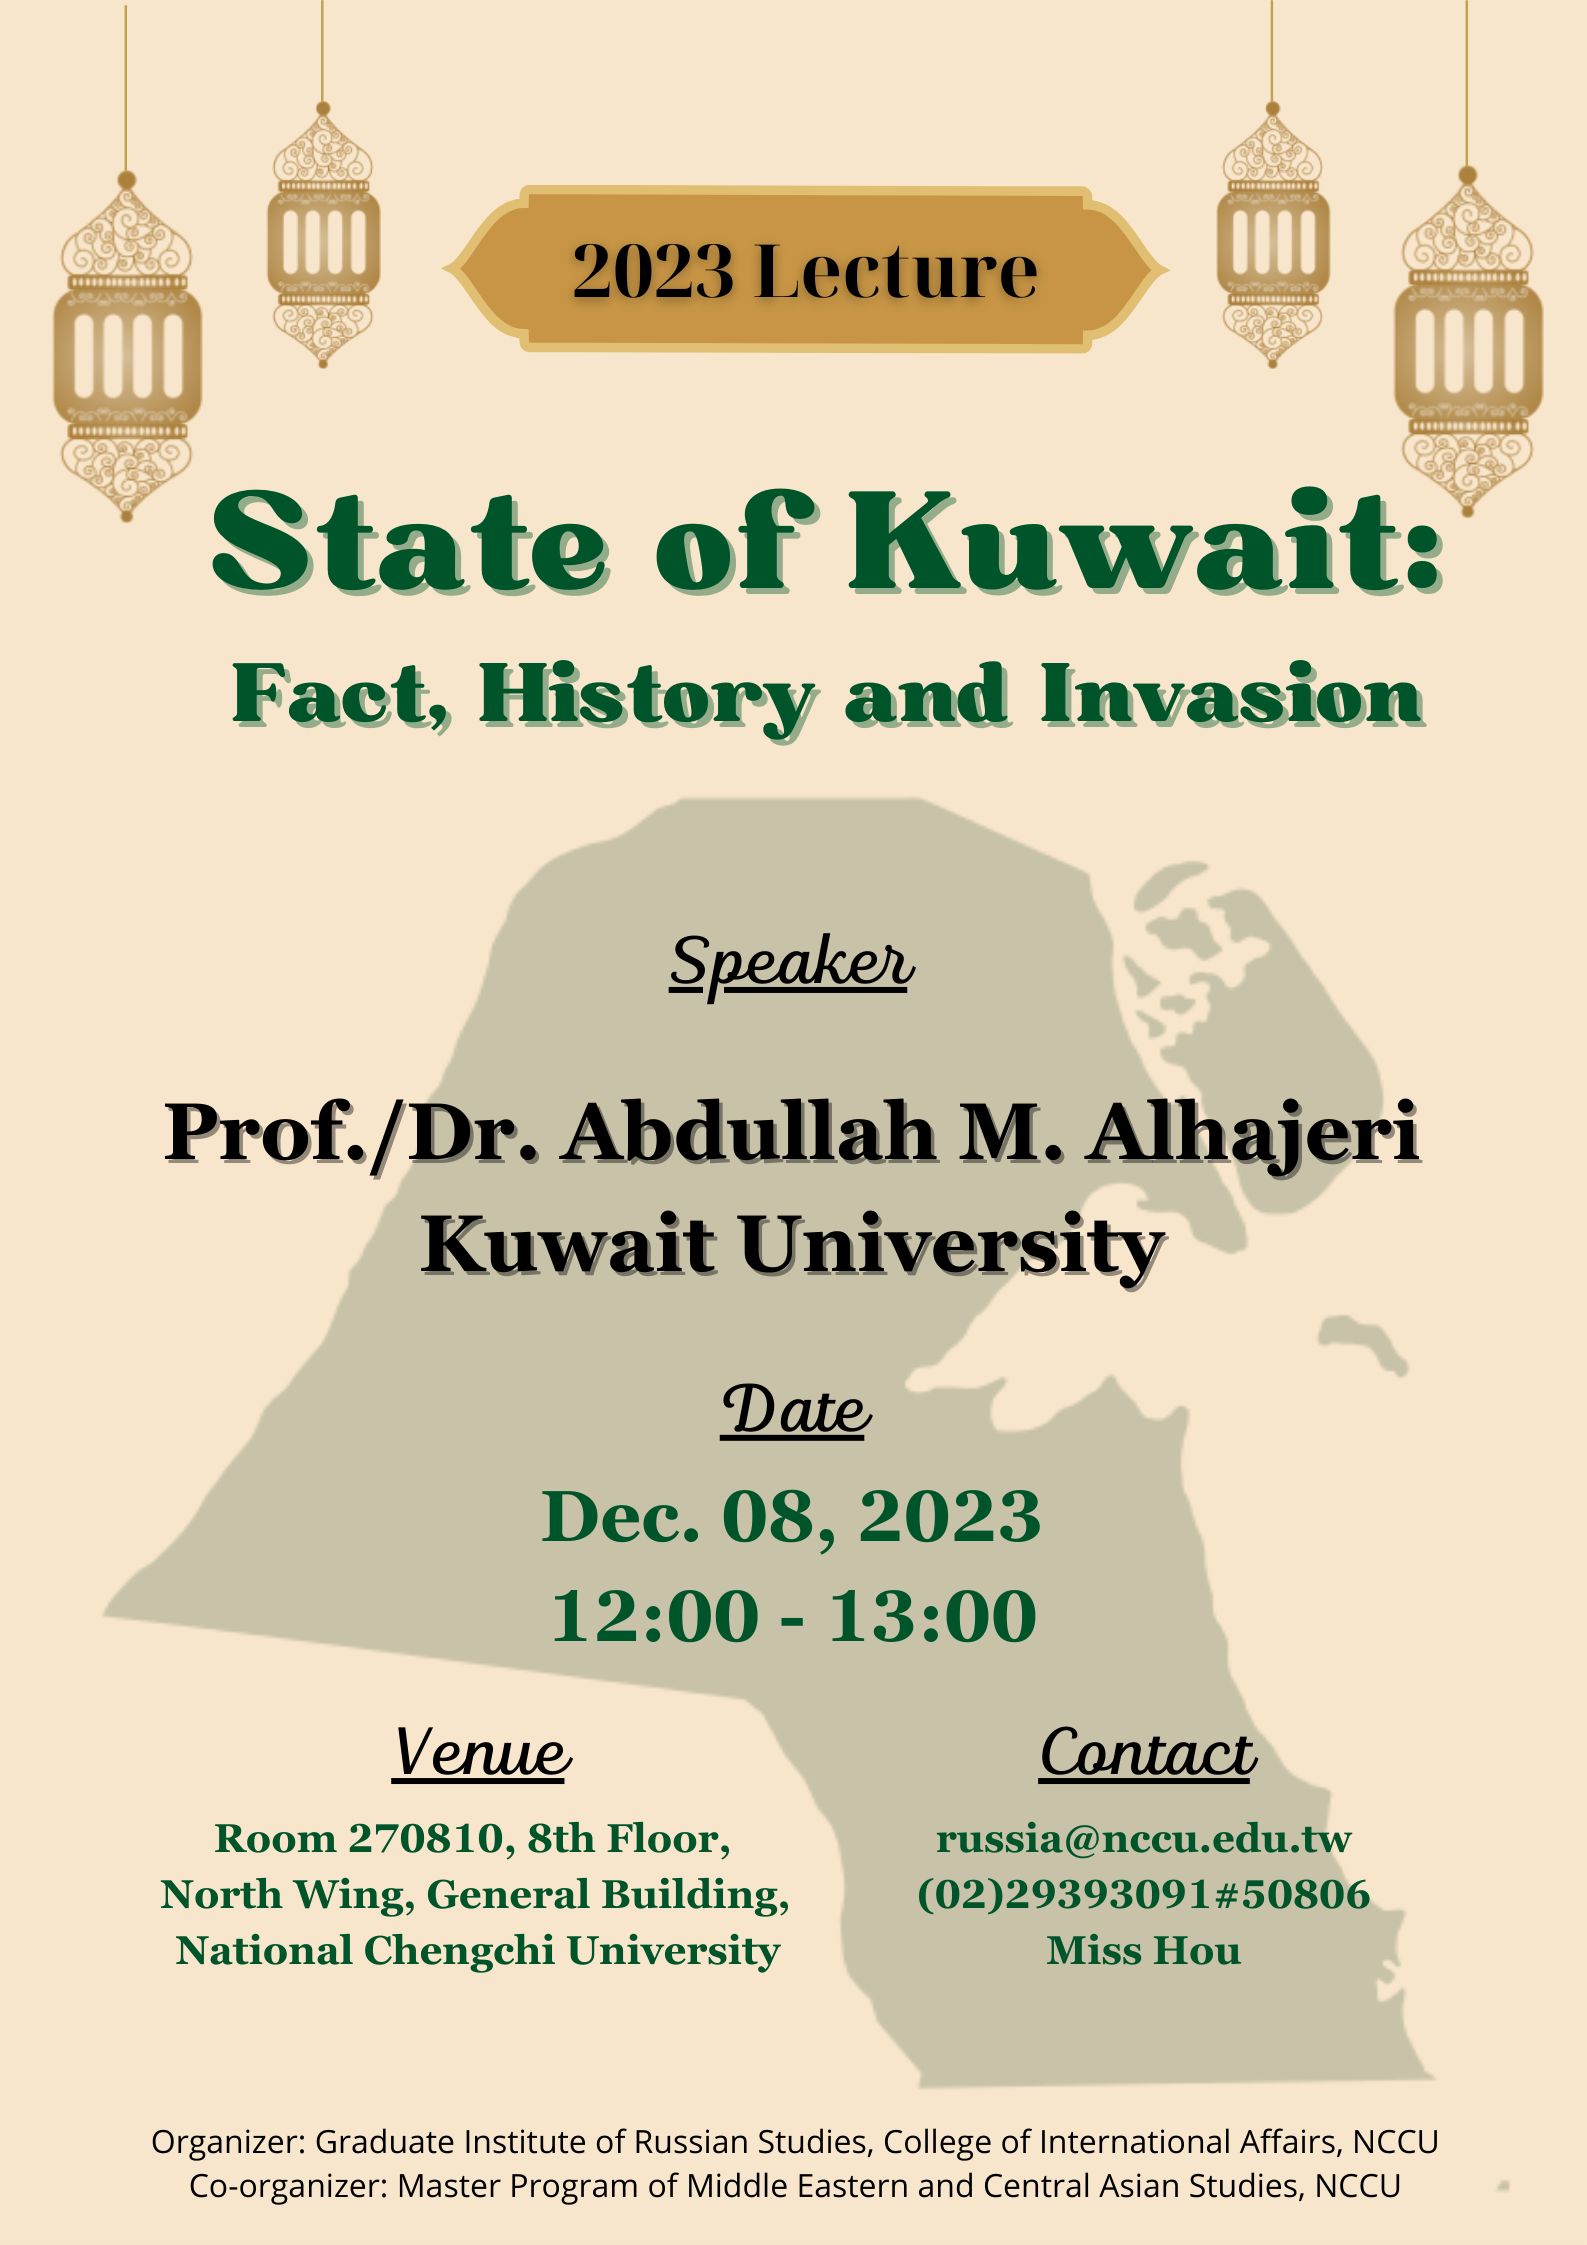 The Lecture of Dr. Abdullah M. Alhajeri 